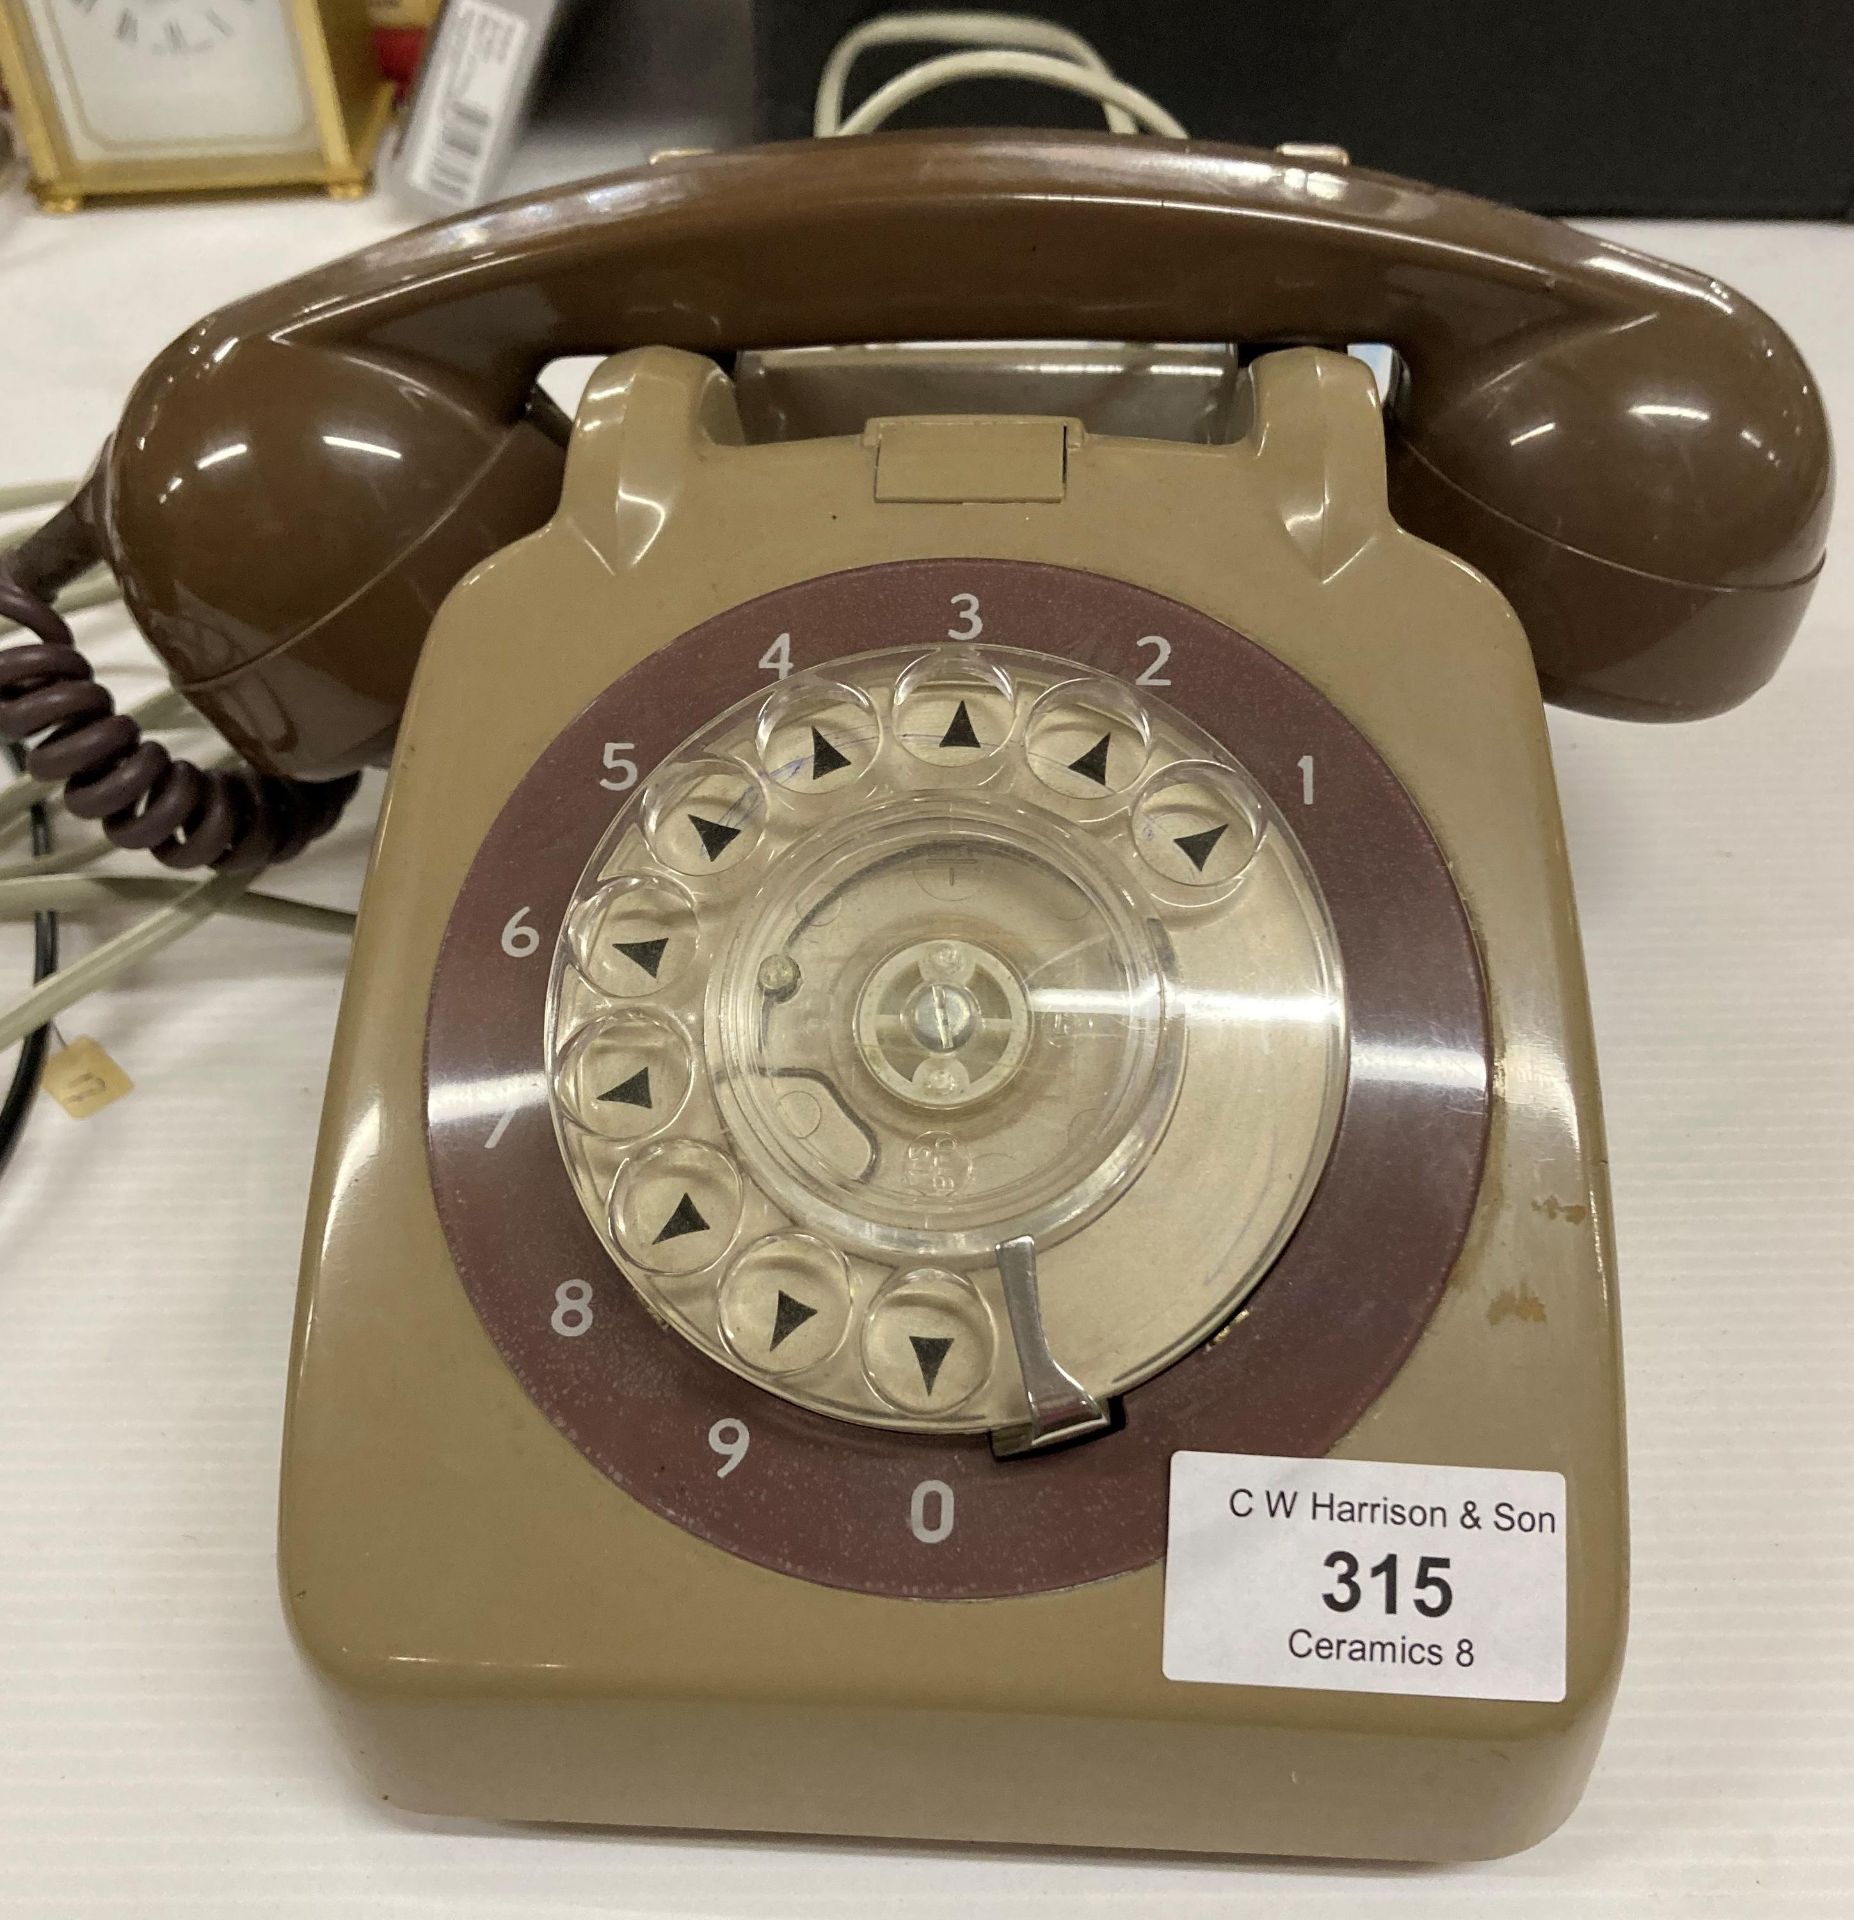 A vintage light brown plastic telephone no SPK N1900E244 (saleroom location: P08)